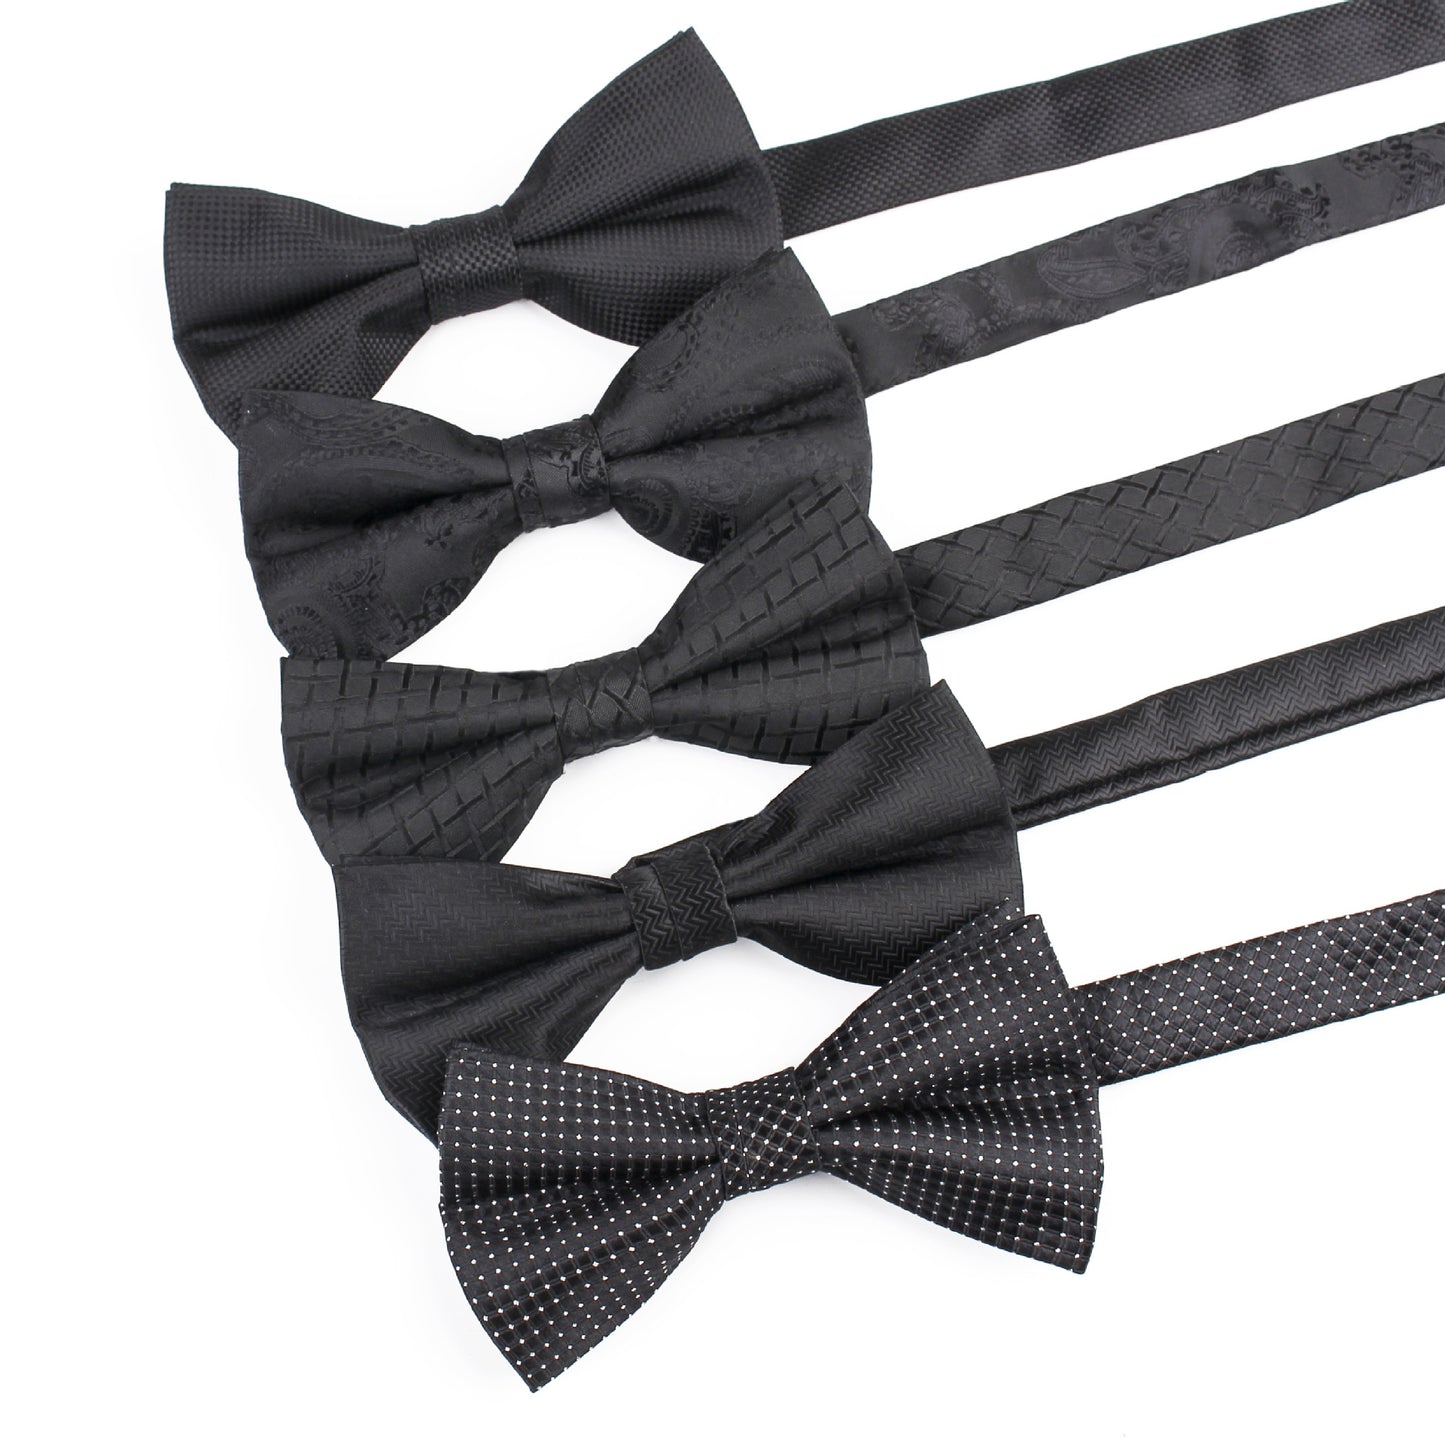 Men's Classic Black Bow Tie Tuxedo Host Groom Groomsmen Bow Tie - Bekro's ART